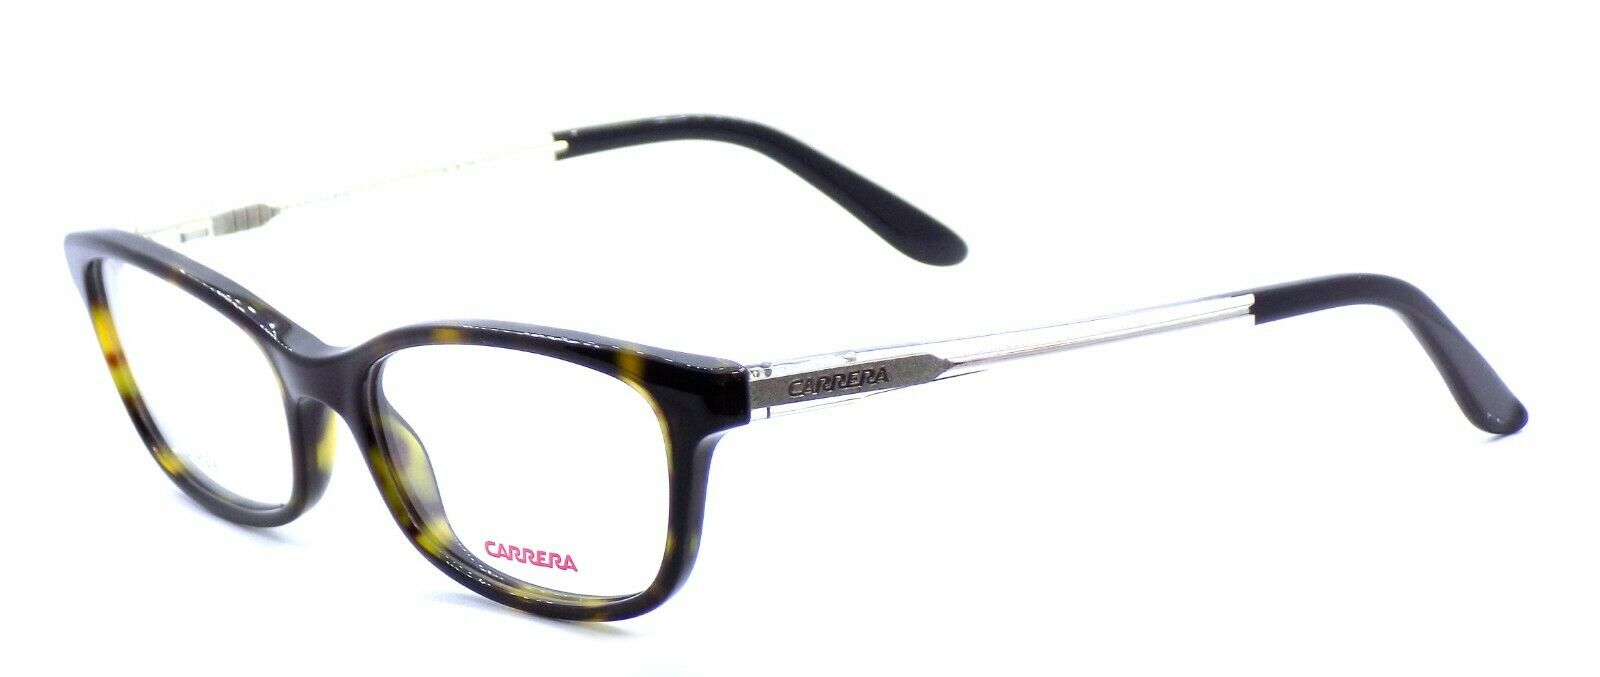 1-Carrera CA6647 QK8 Women's Eyeglasses Frames 50-17-140 Dark Havana + CASE-762753669988-IKSpecs